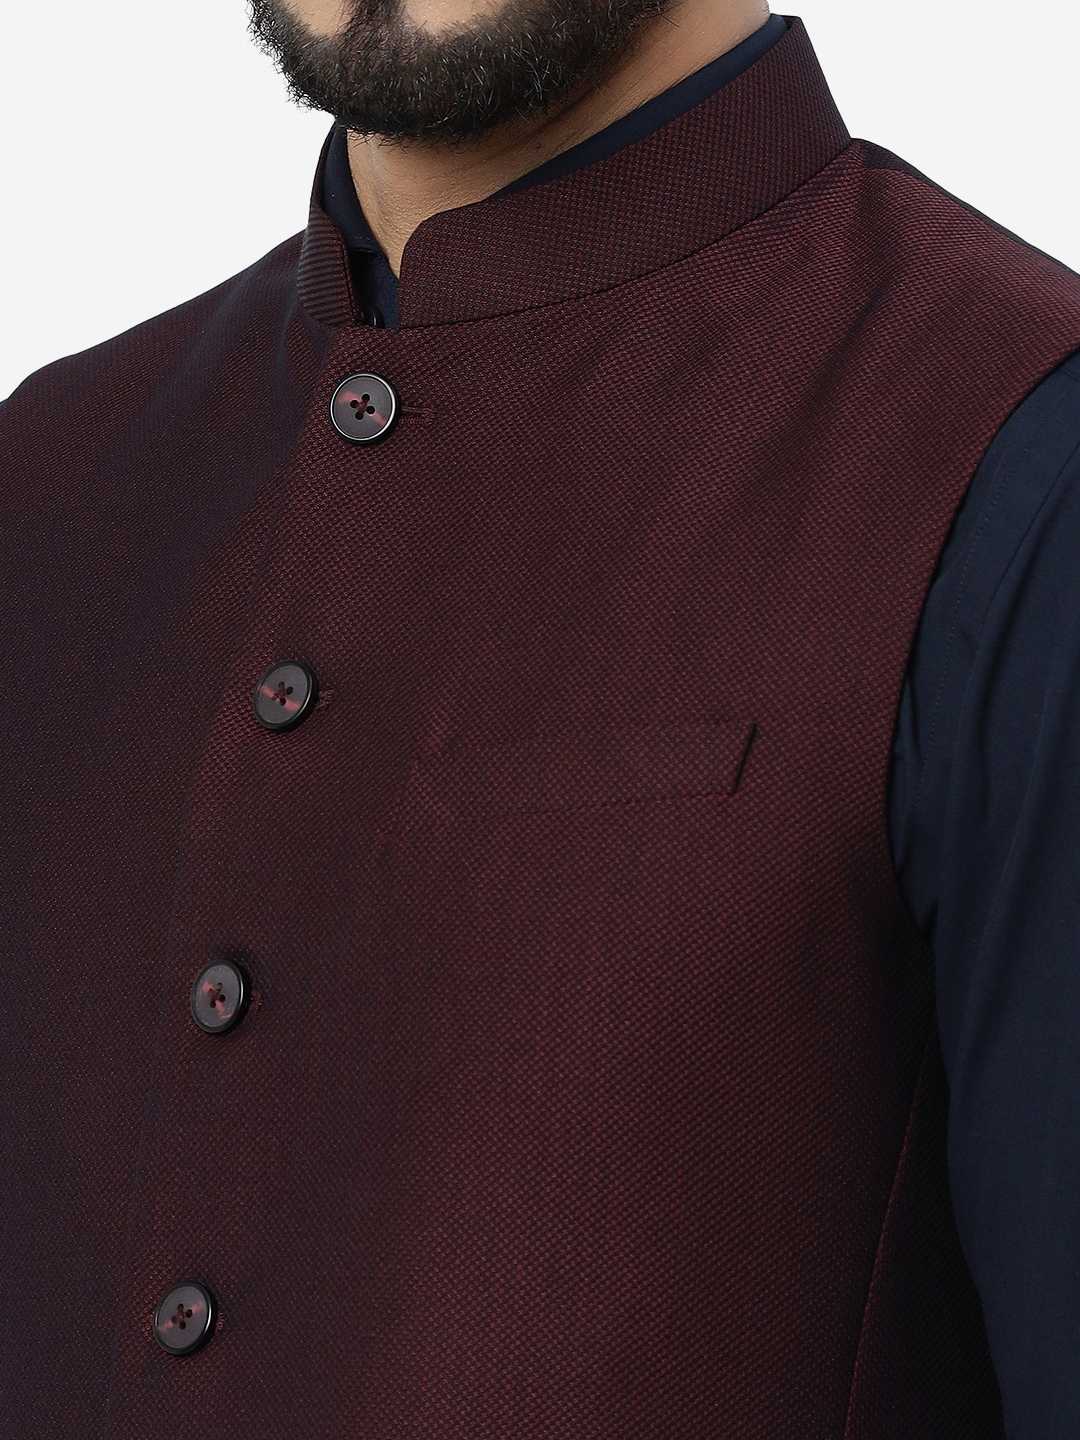 Akarshan - 💥 Elegant & Beautiful Modi Suit with Kurta Pajama & Jacket in  Silk Material 👉 https://bit.ly/3JyX1tf or Shop Via Video Call ☎️  092792352, 0212674446 💥 | Facebook